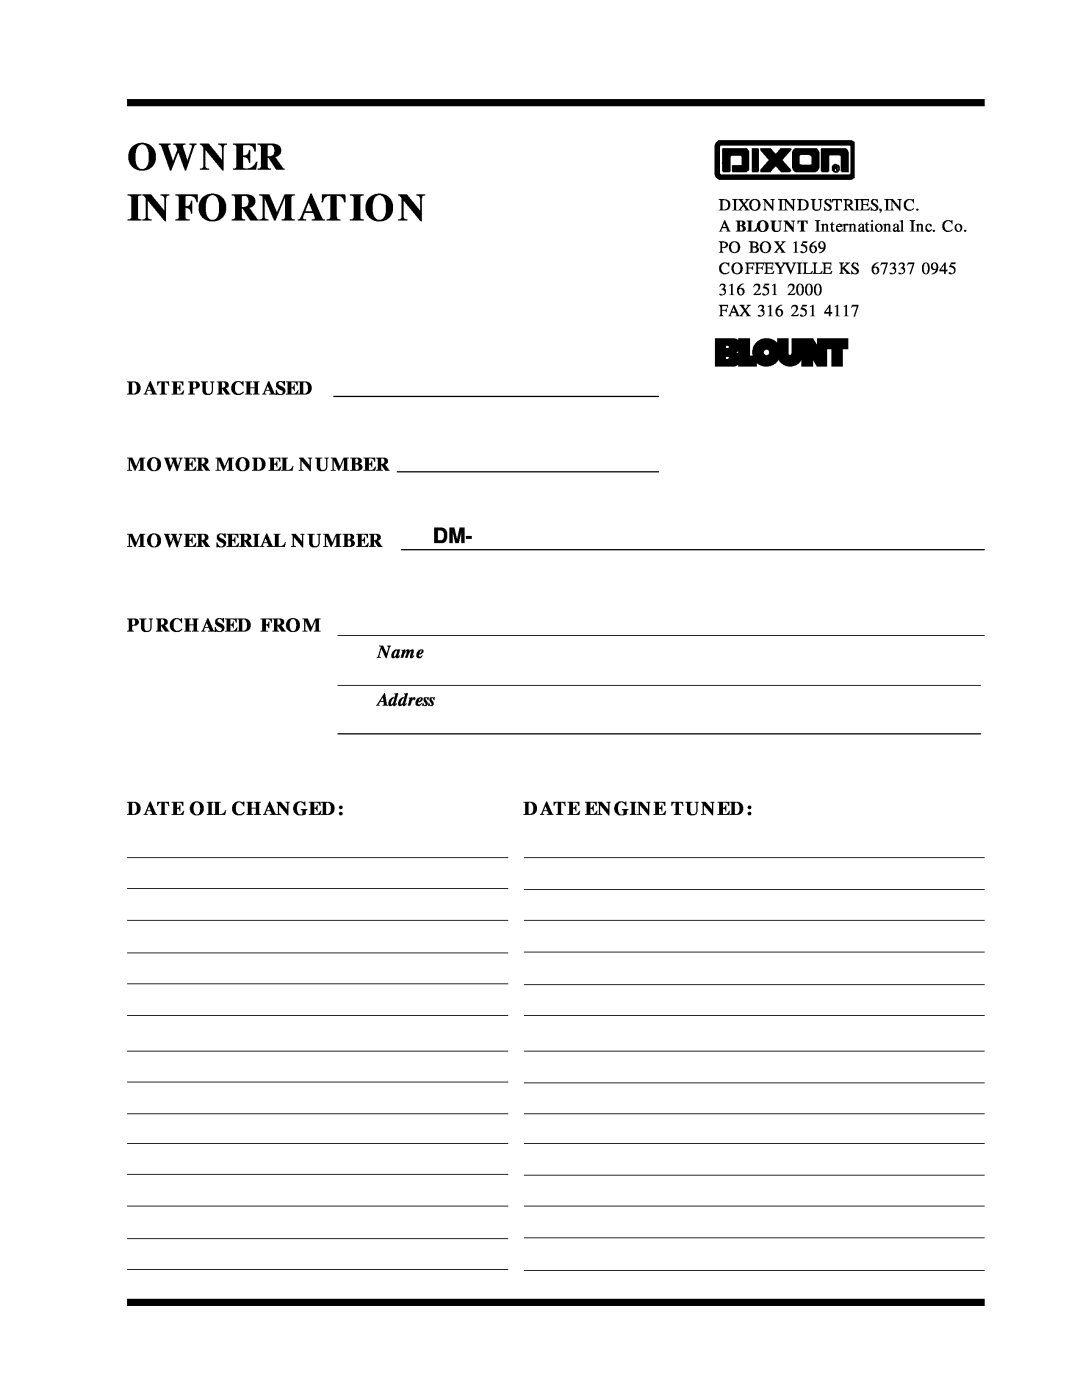 Dixon 1857-0599 manual Owner Information, Name Address, Dixonindustries,Inc, Fax 